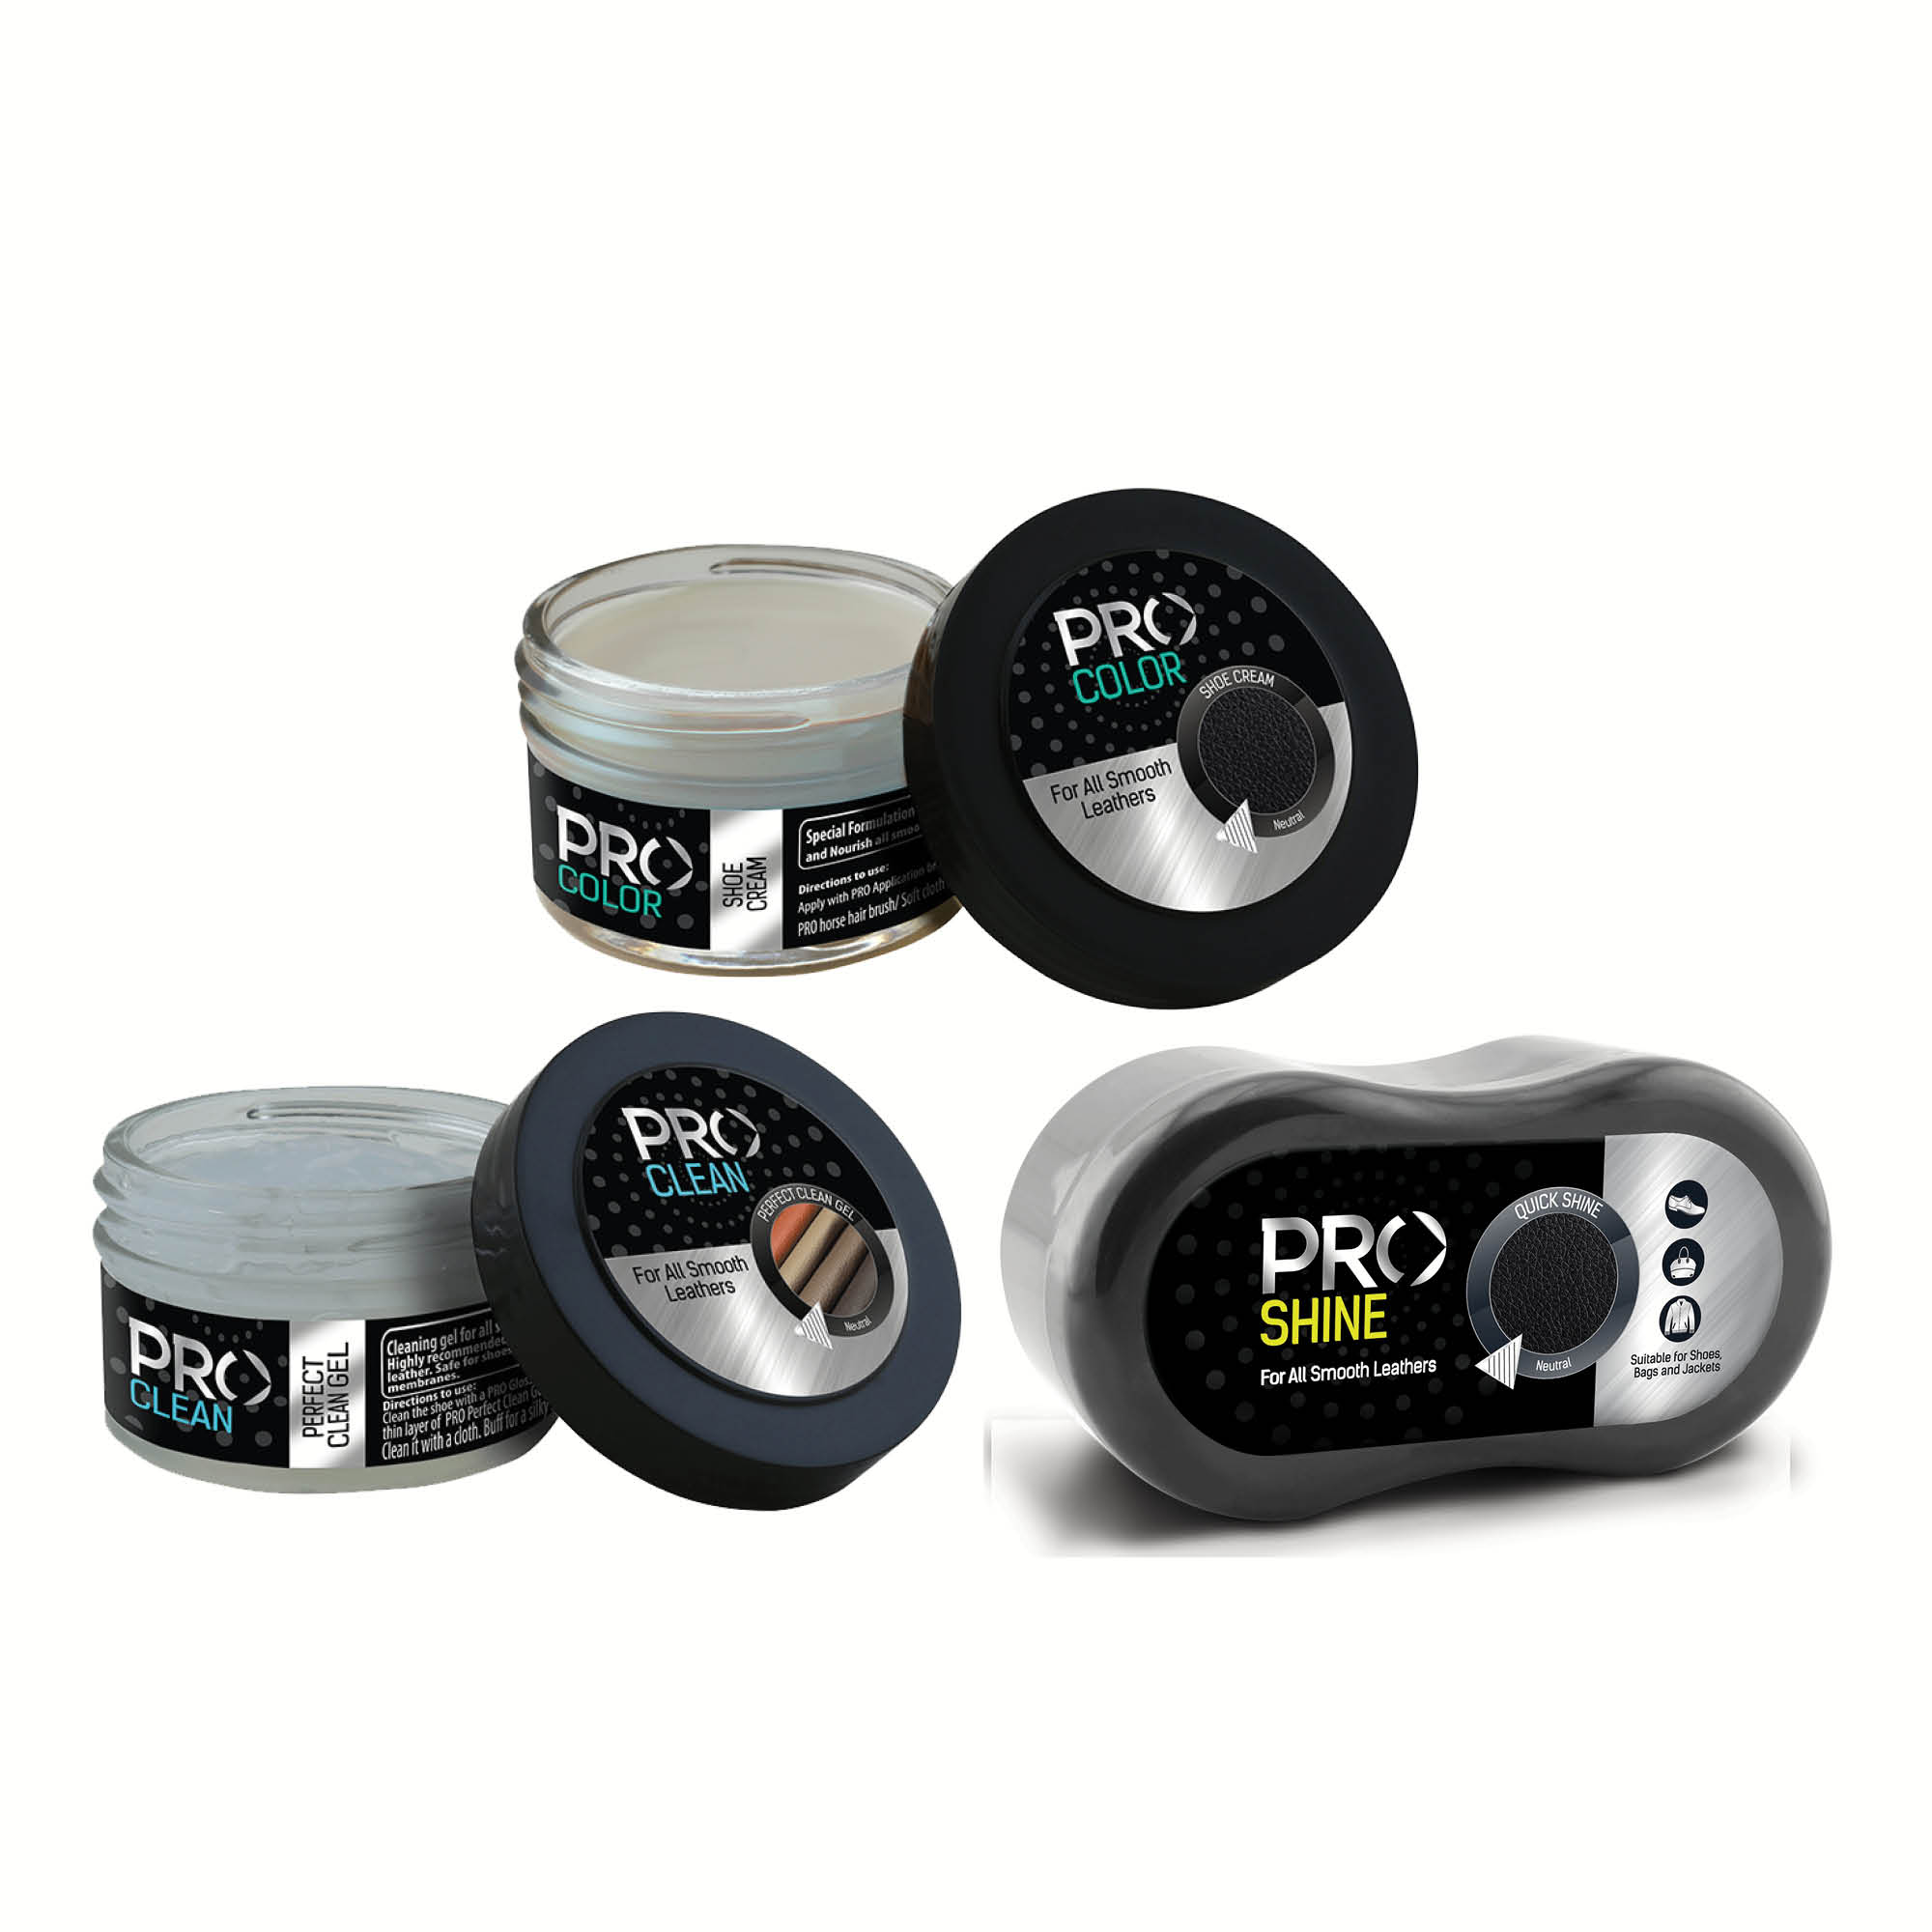 Pro shoe moisturiser pack of 2 I Pro moisturiser combo kit